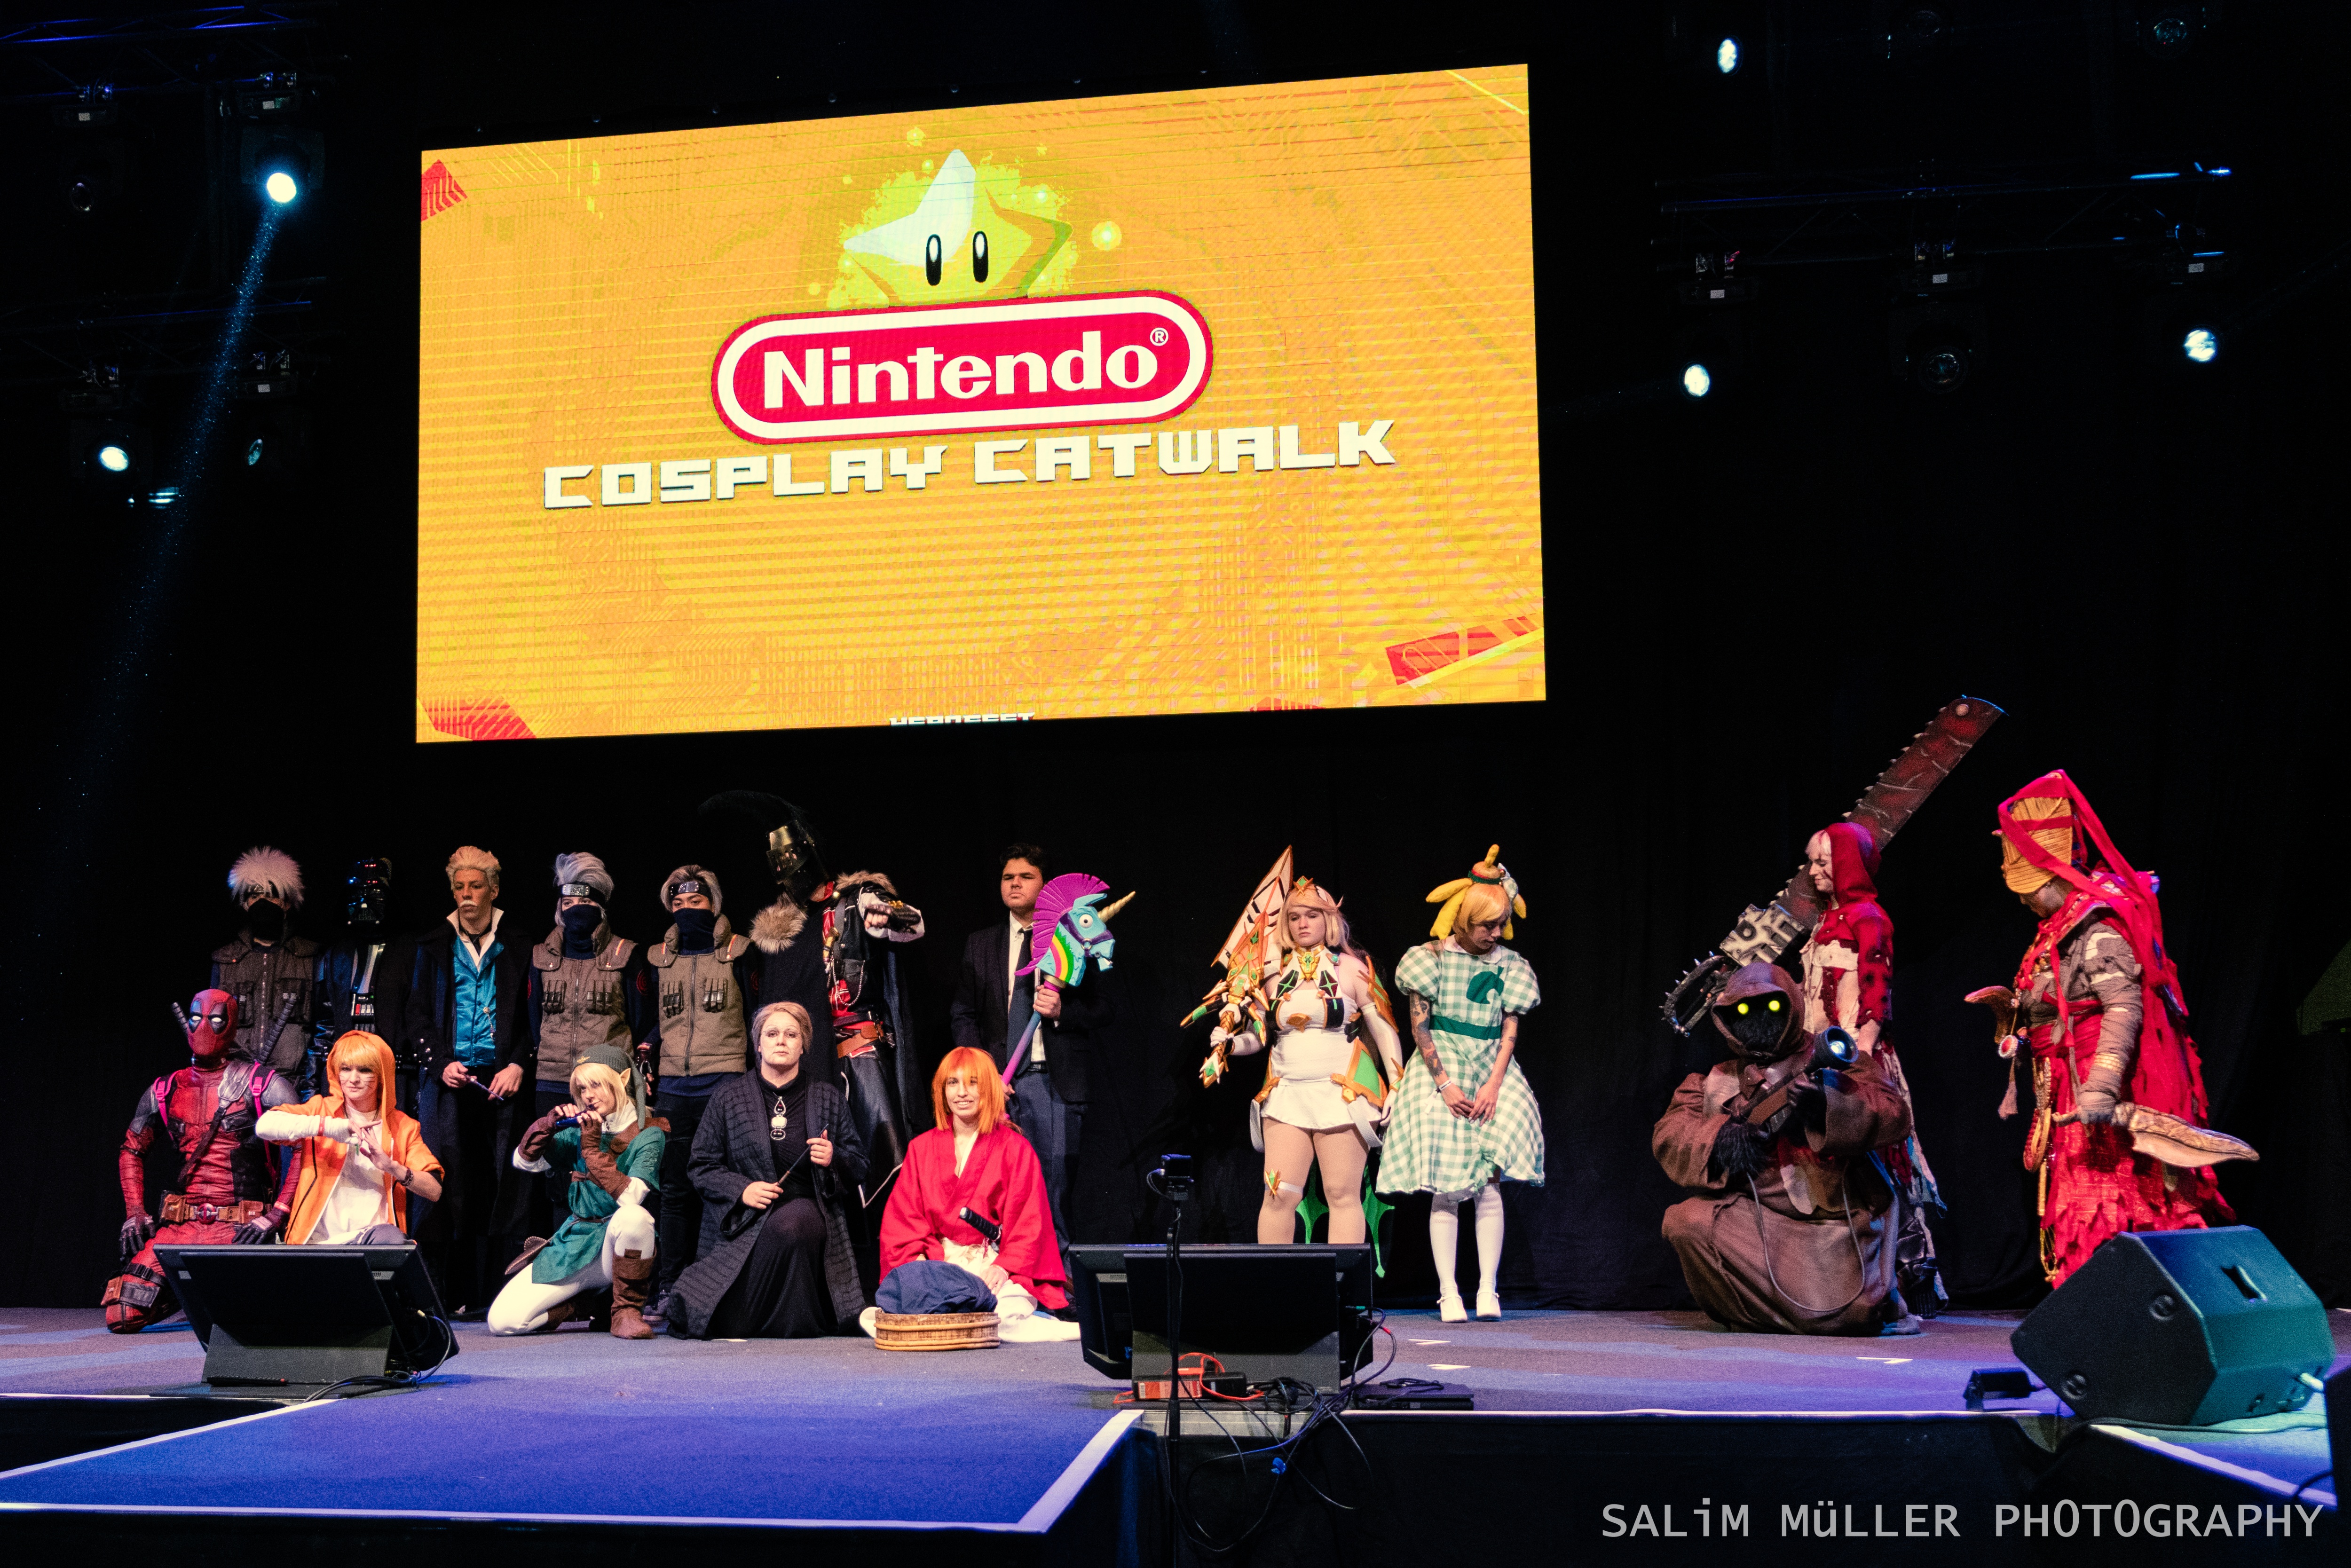 Herofest 2019 - Nintendo Cosplay Catwalk (Sonntag) - 049